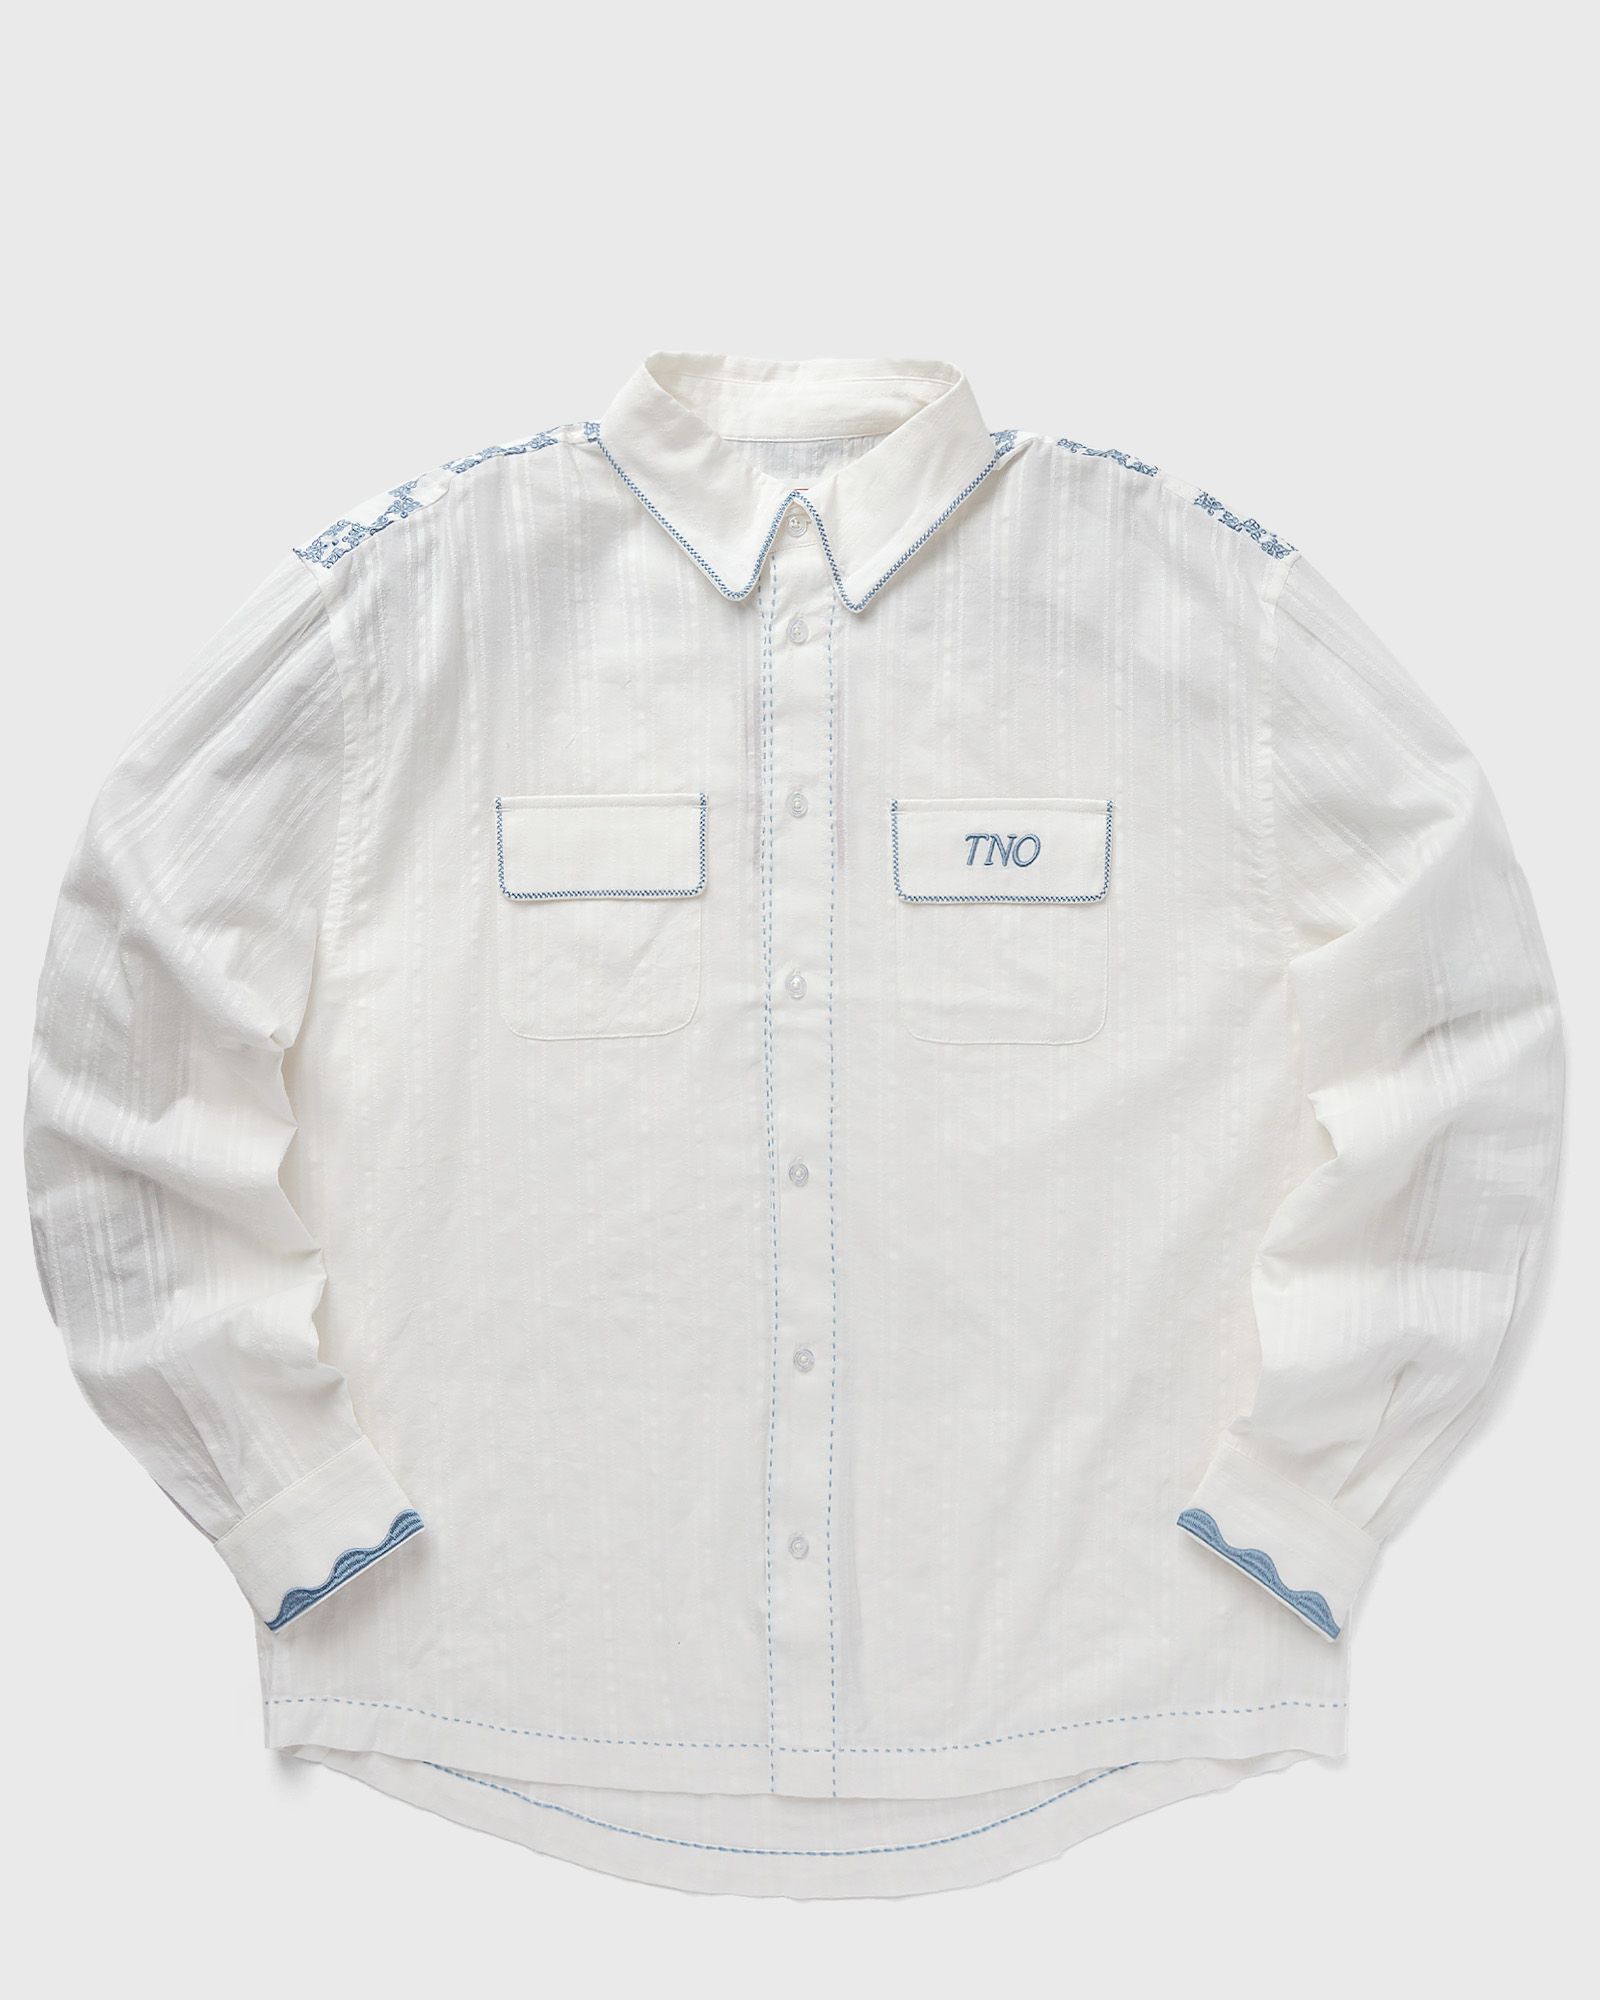 The New Originals - kitchen shirt men longsleeves|shirts & blouses white in größe:l